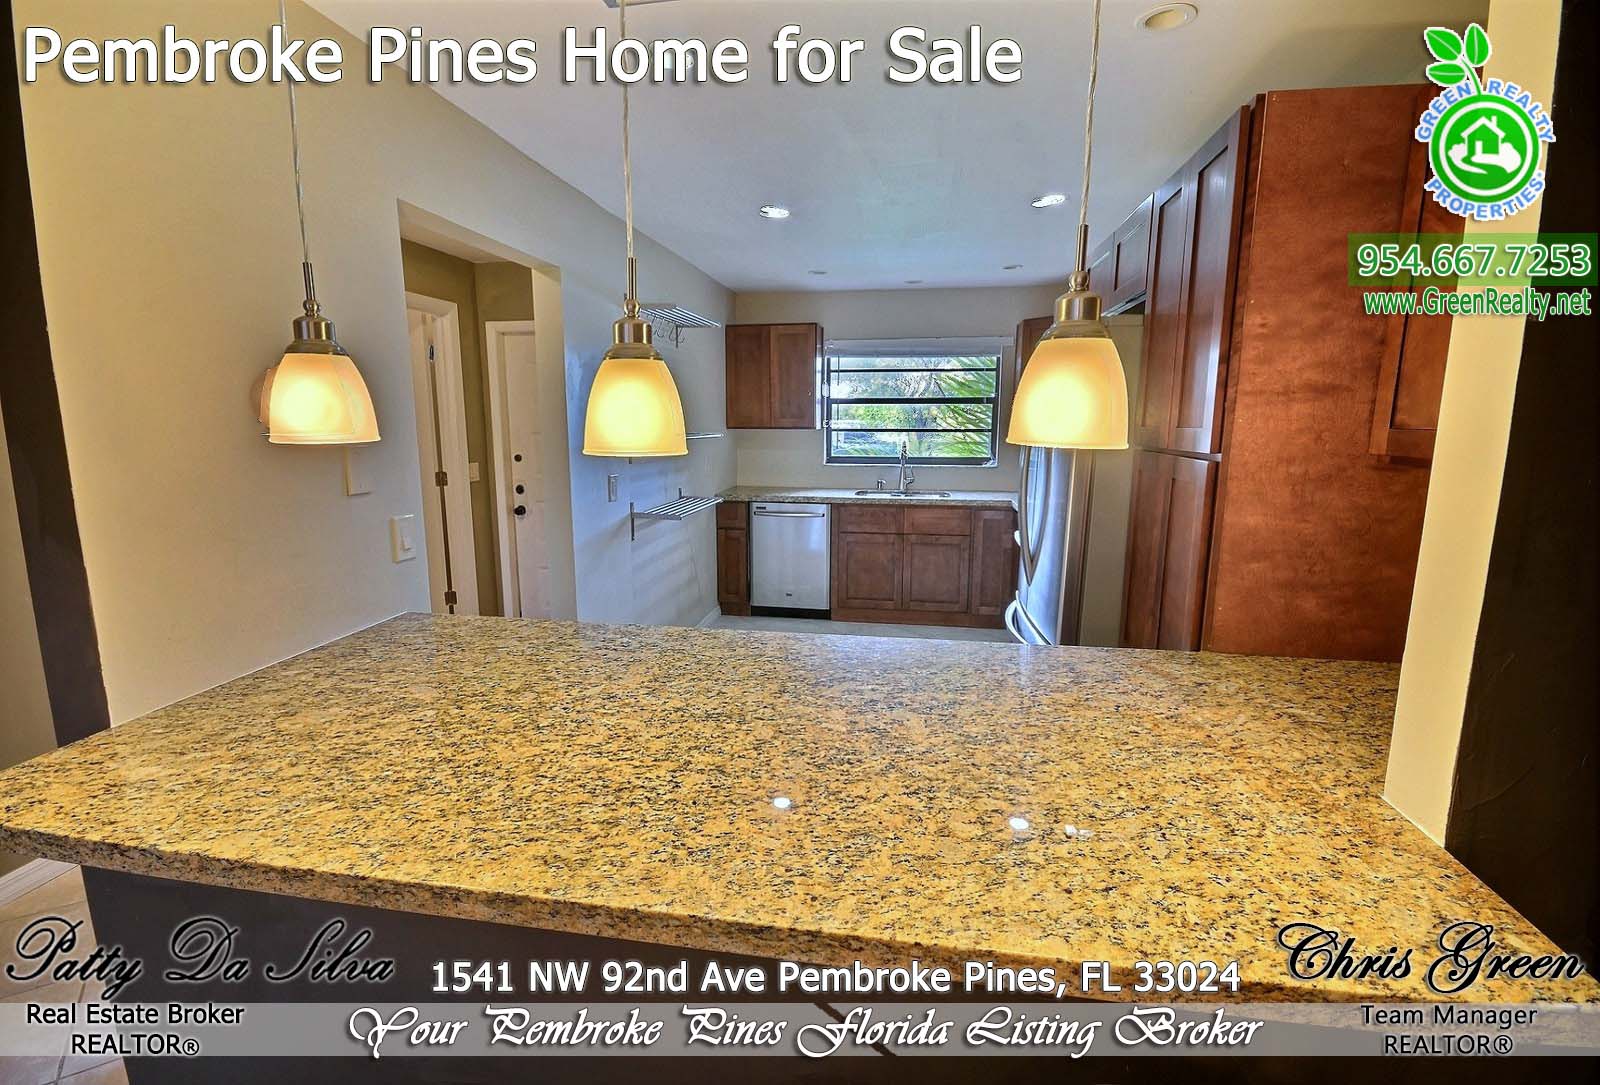 Top Pembroke Pines Real Estate